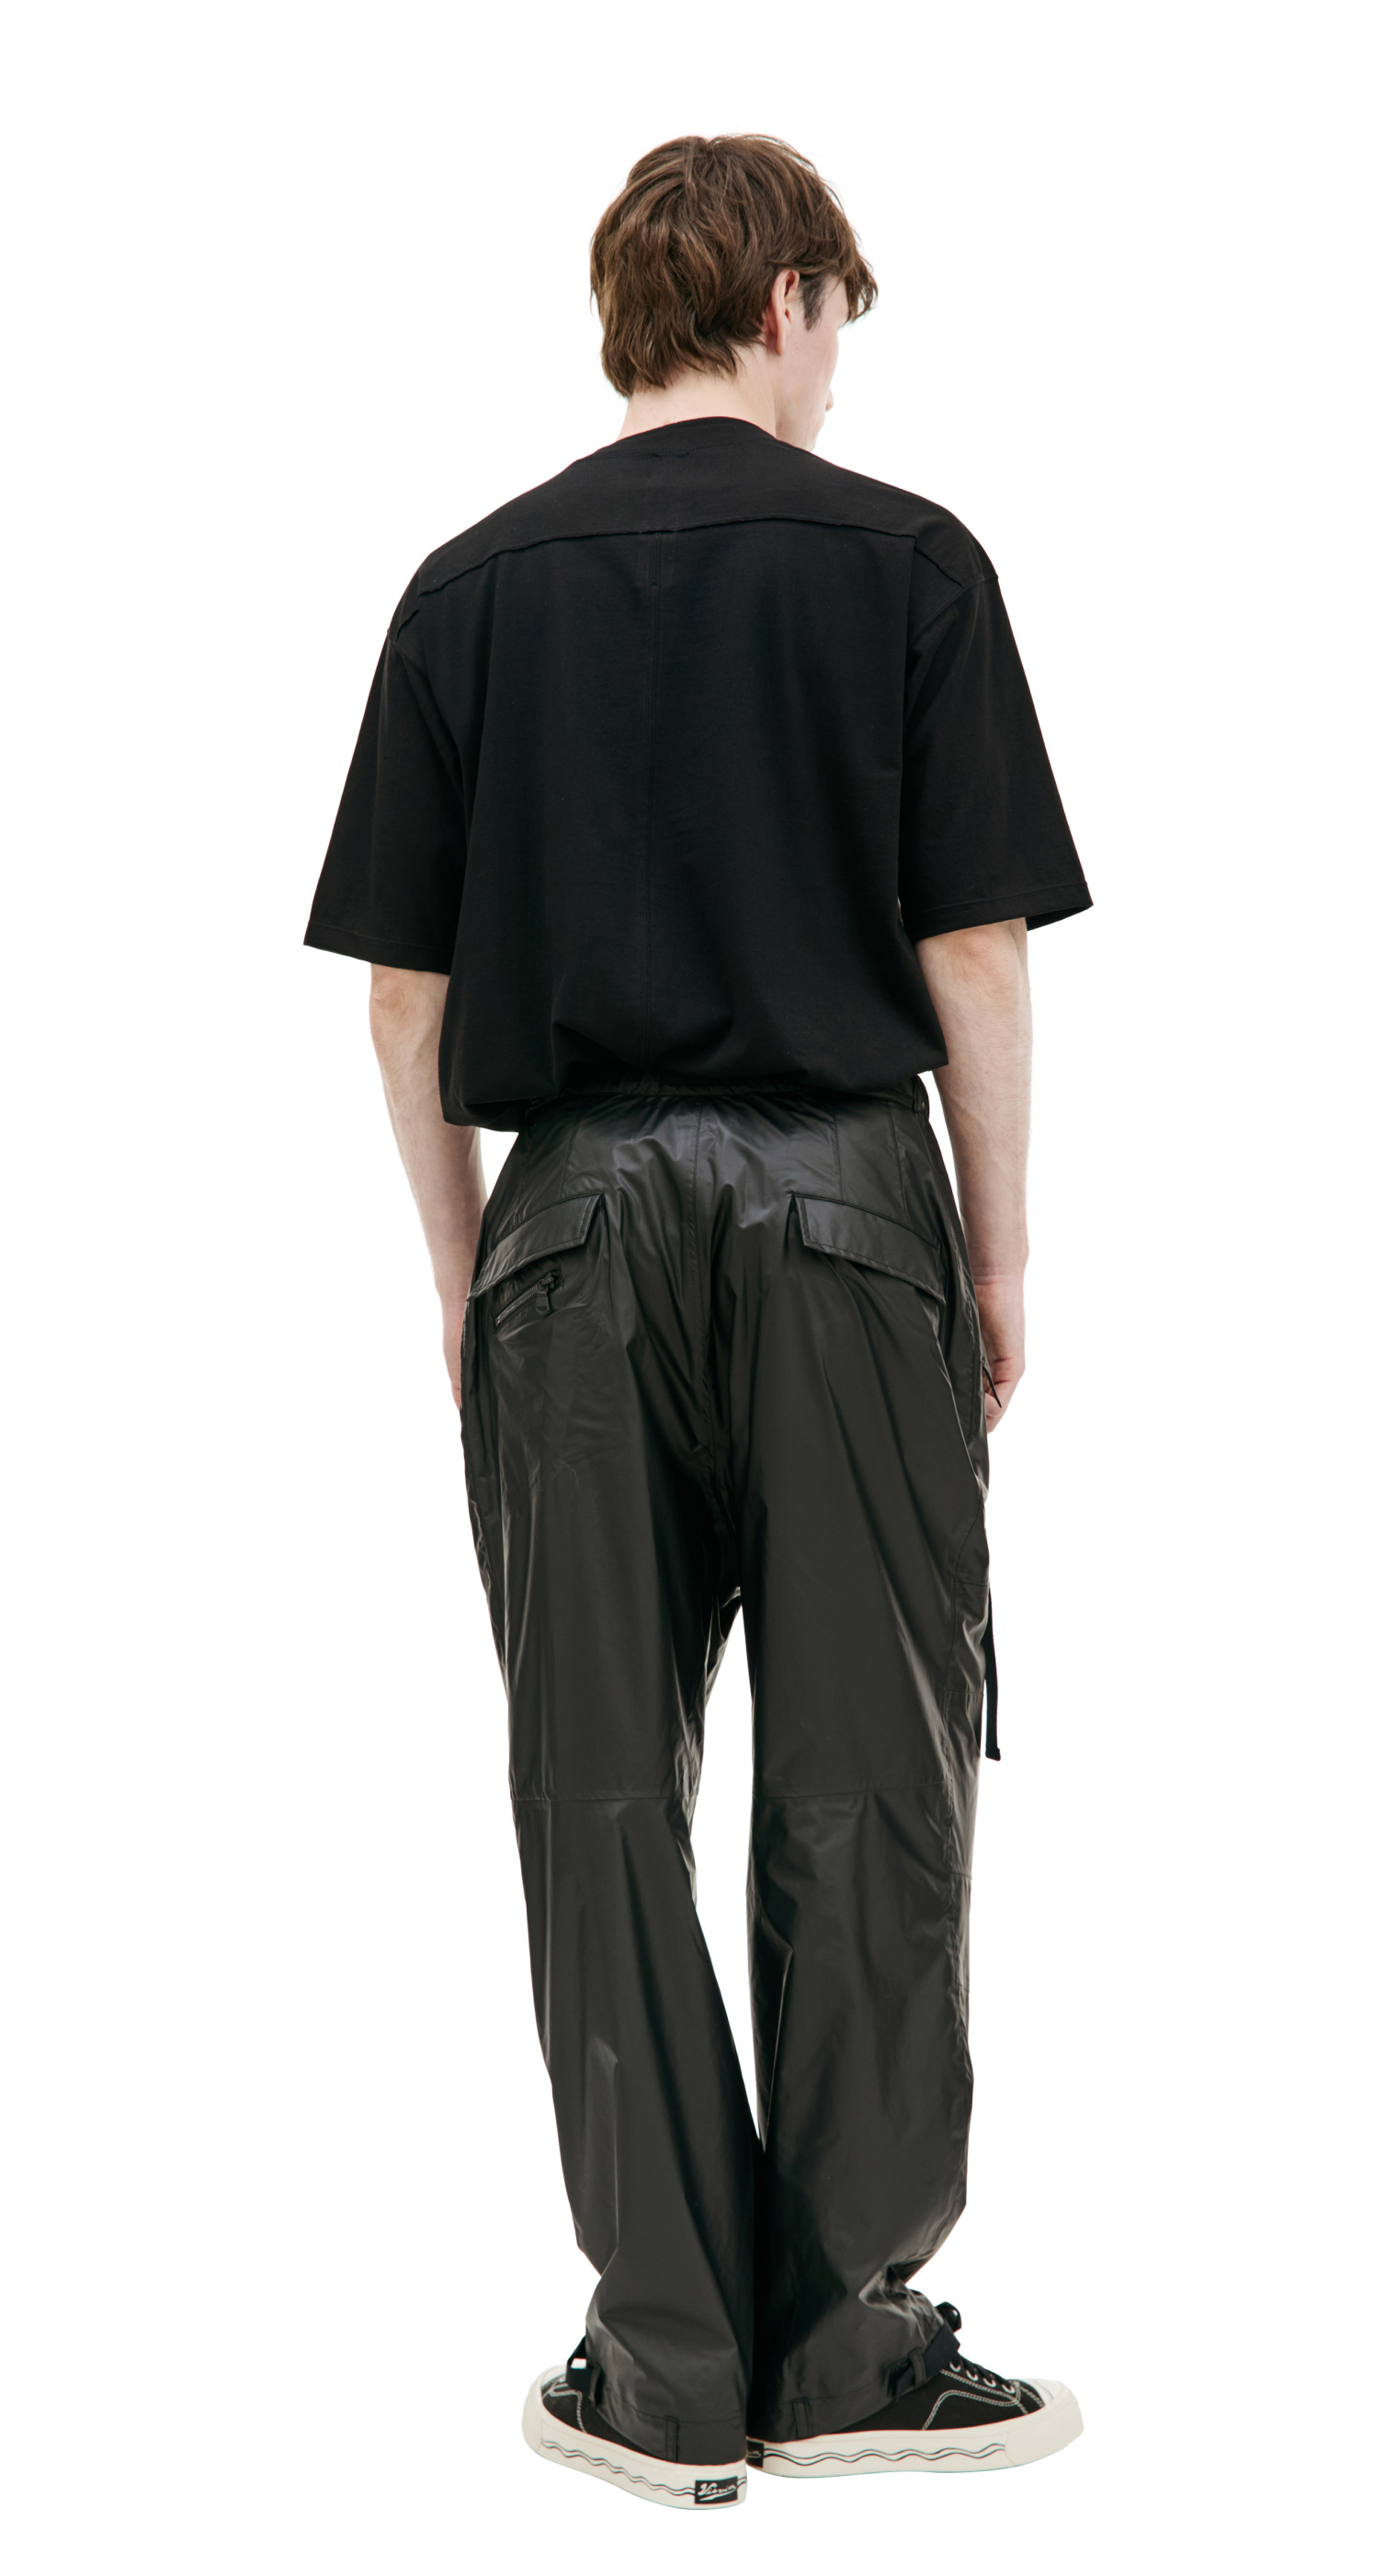 The Viridi-Anne Nylon zip trousers